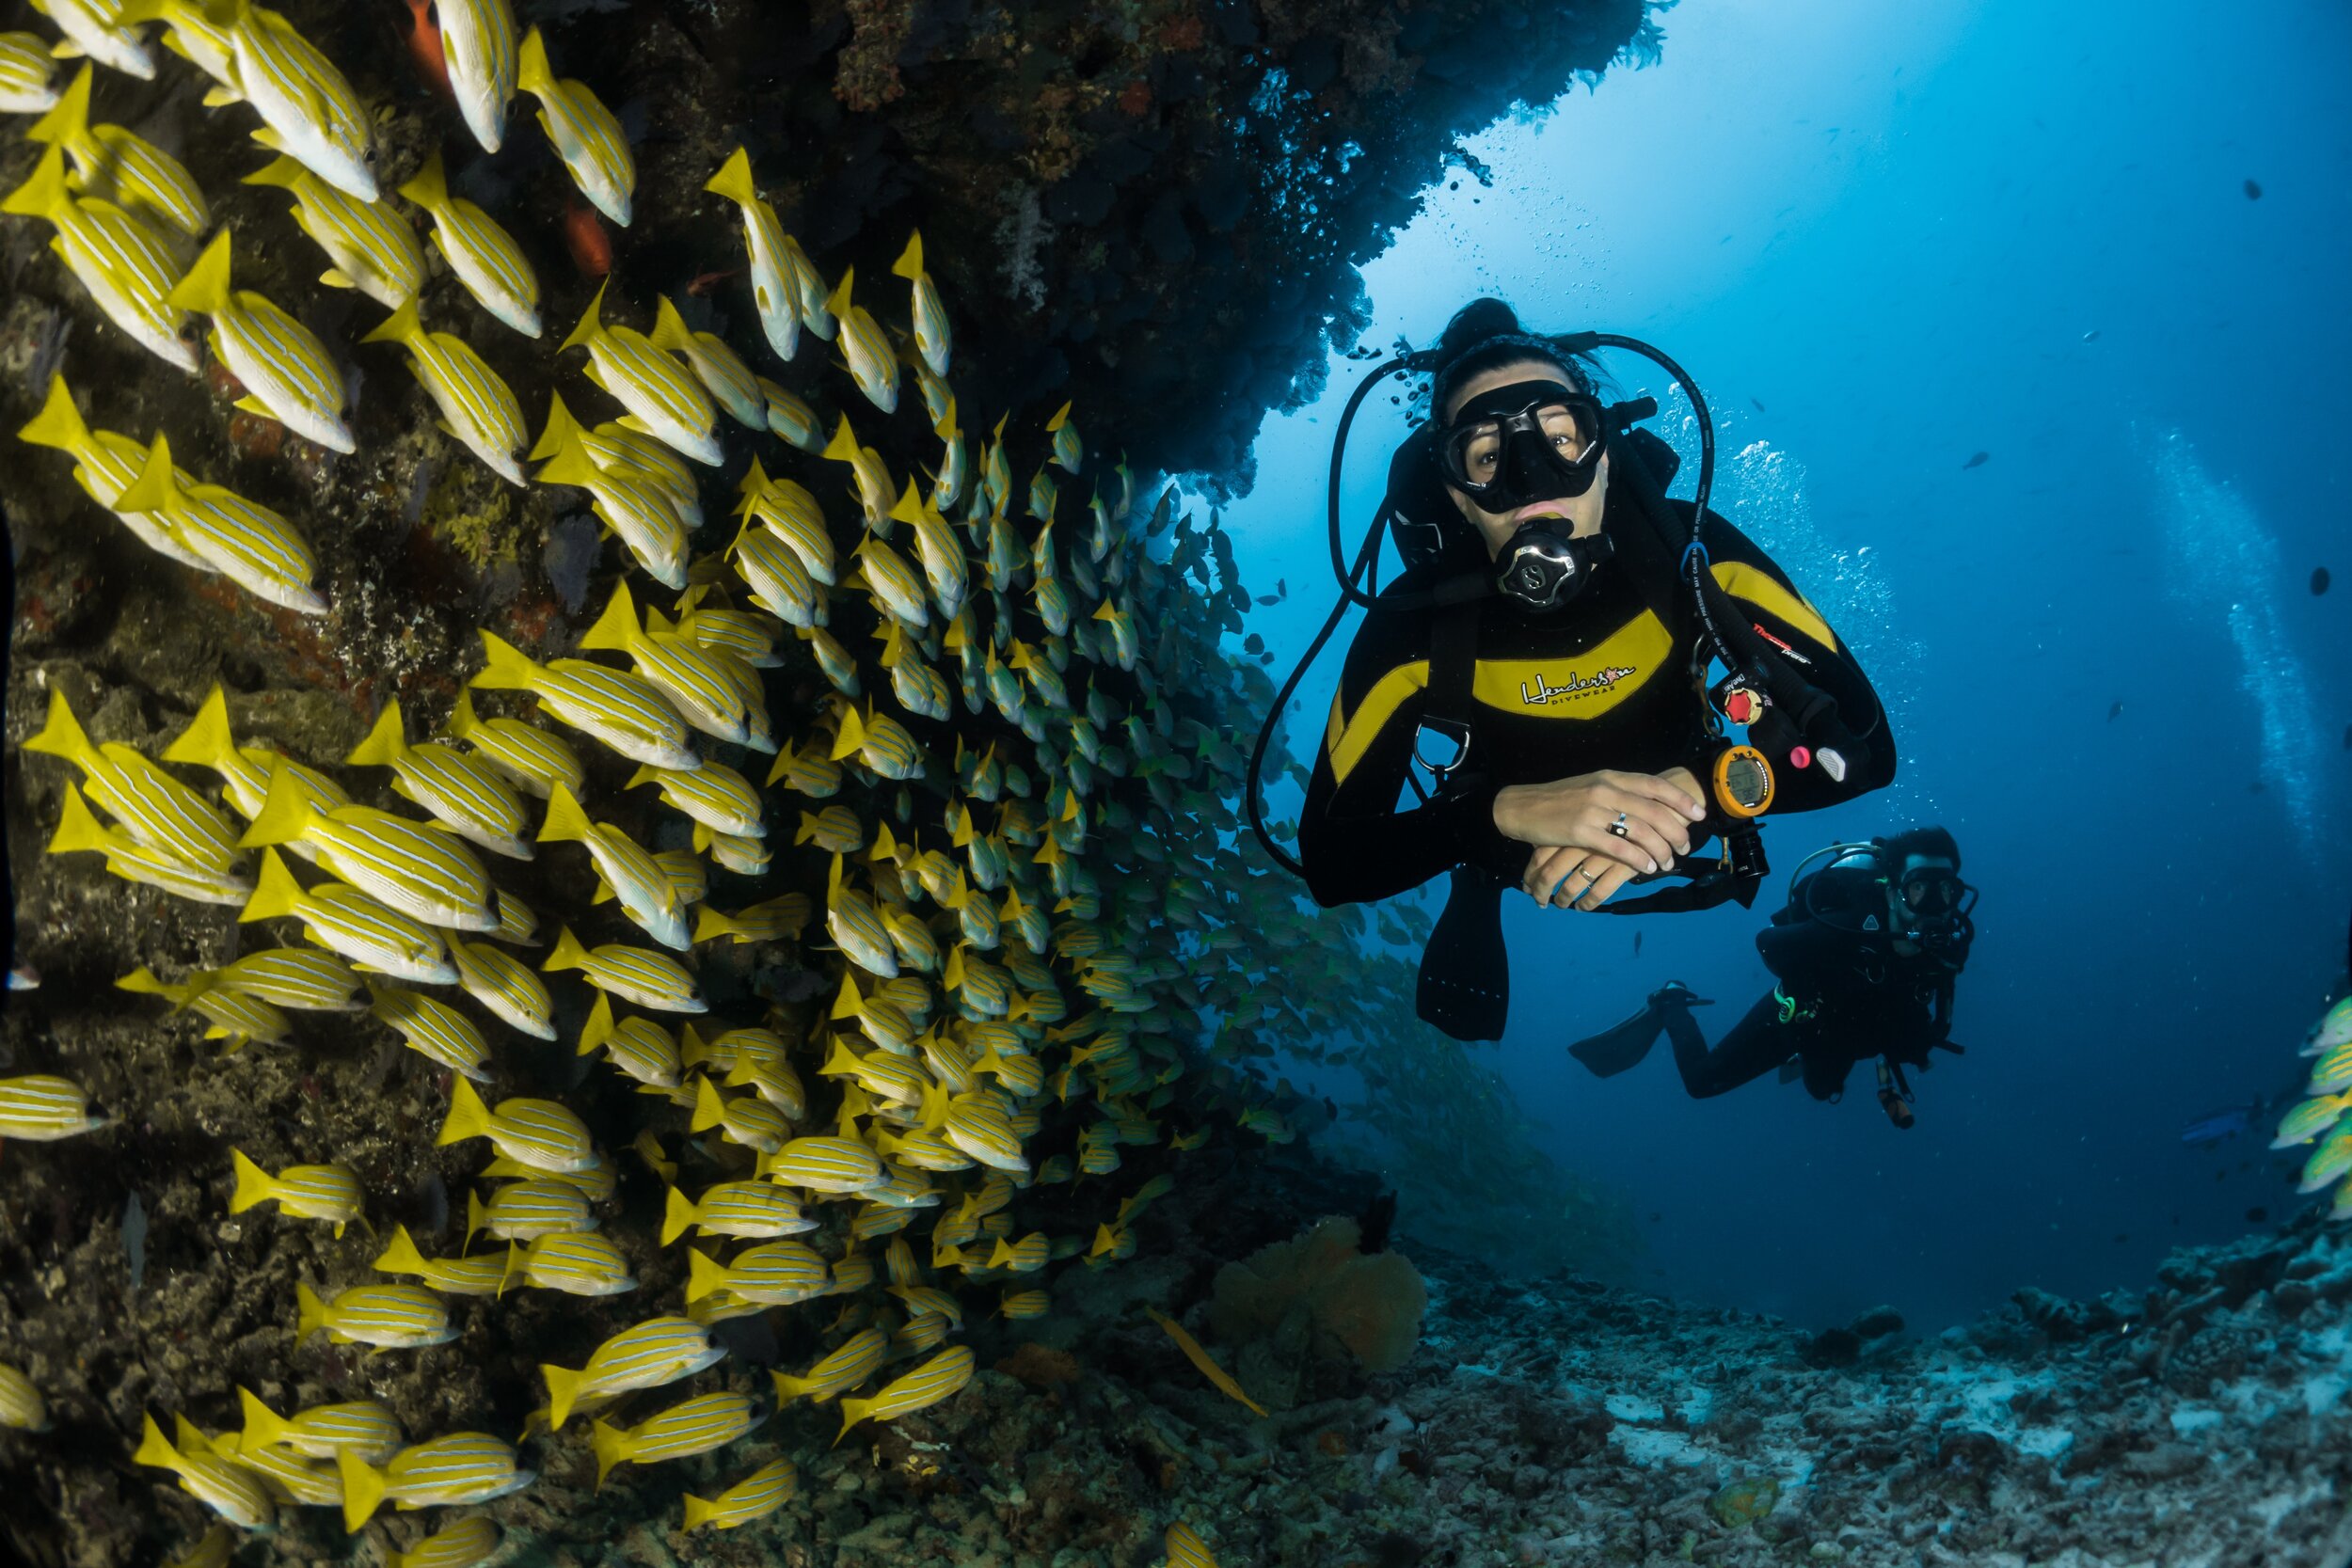 Scuba Diving Adventures